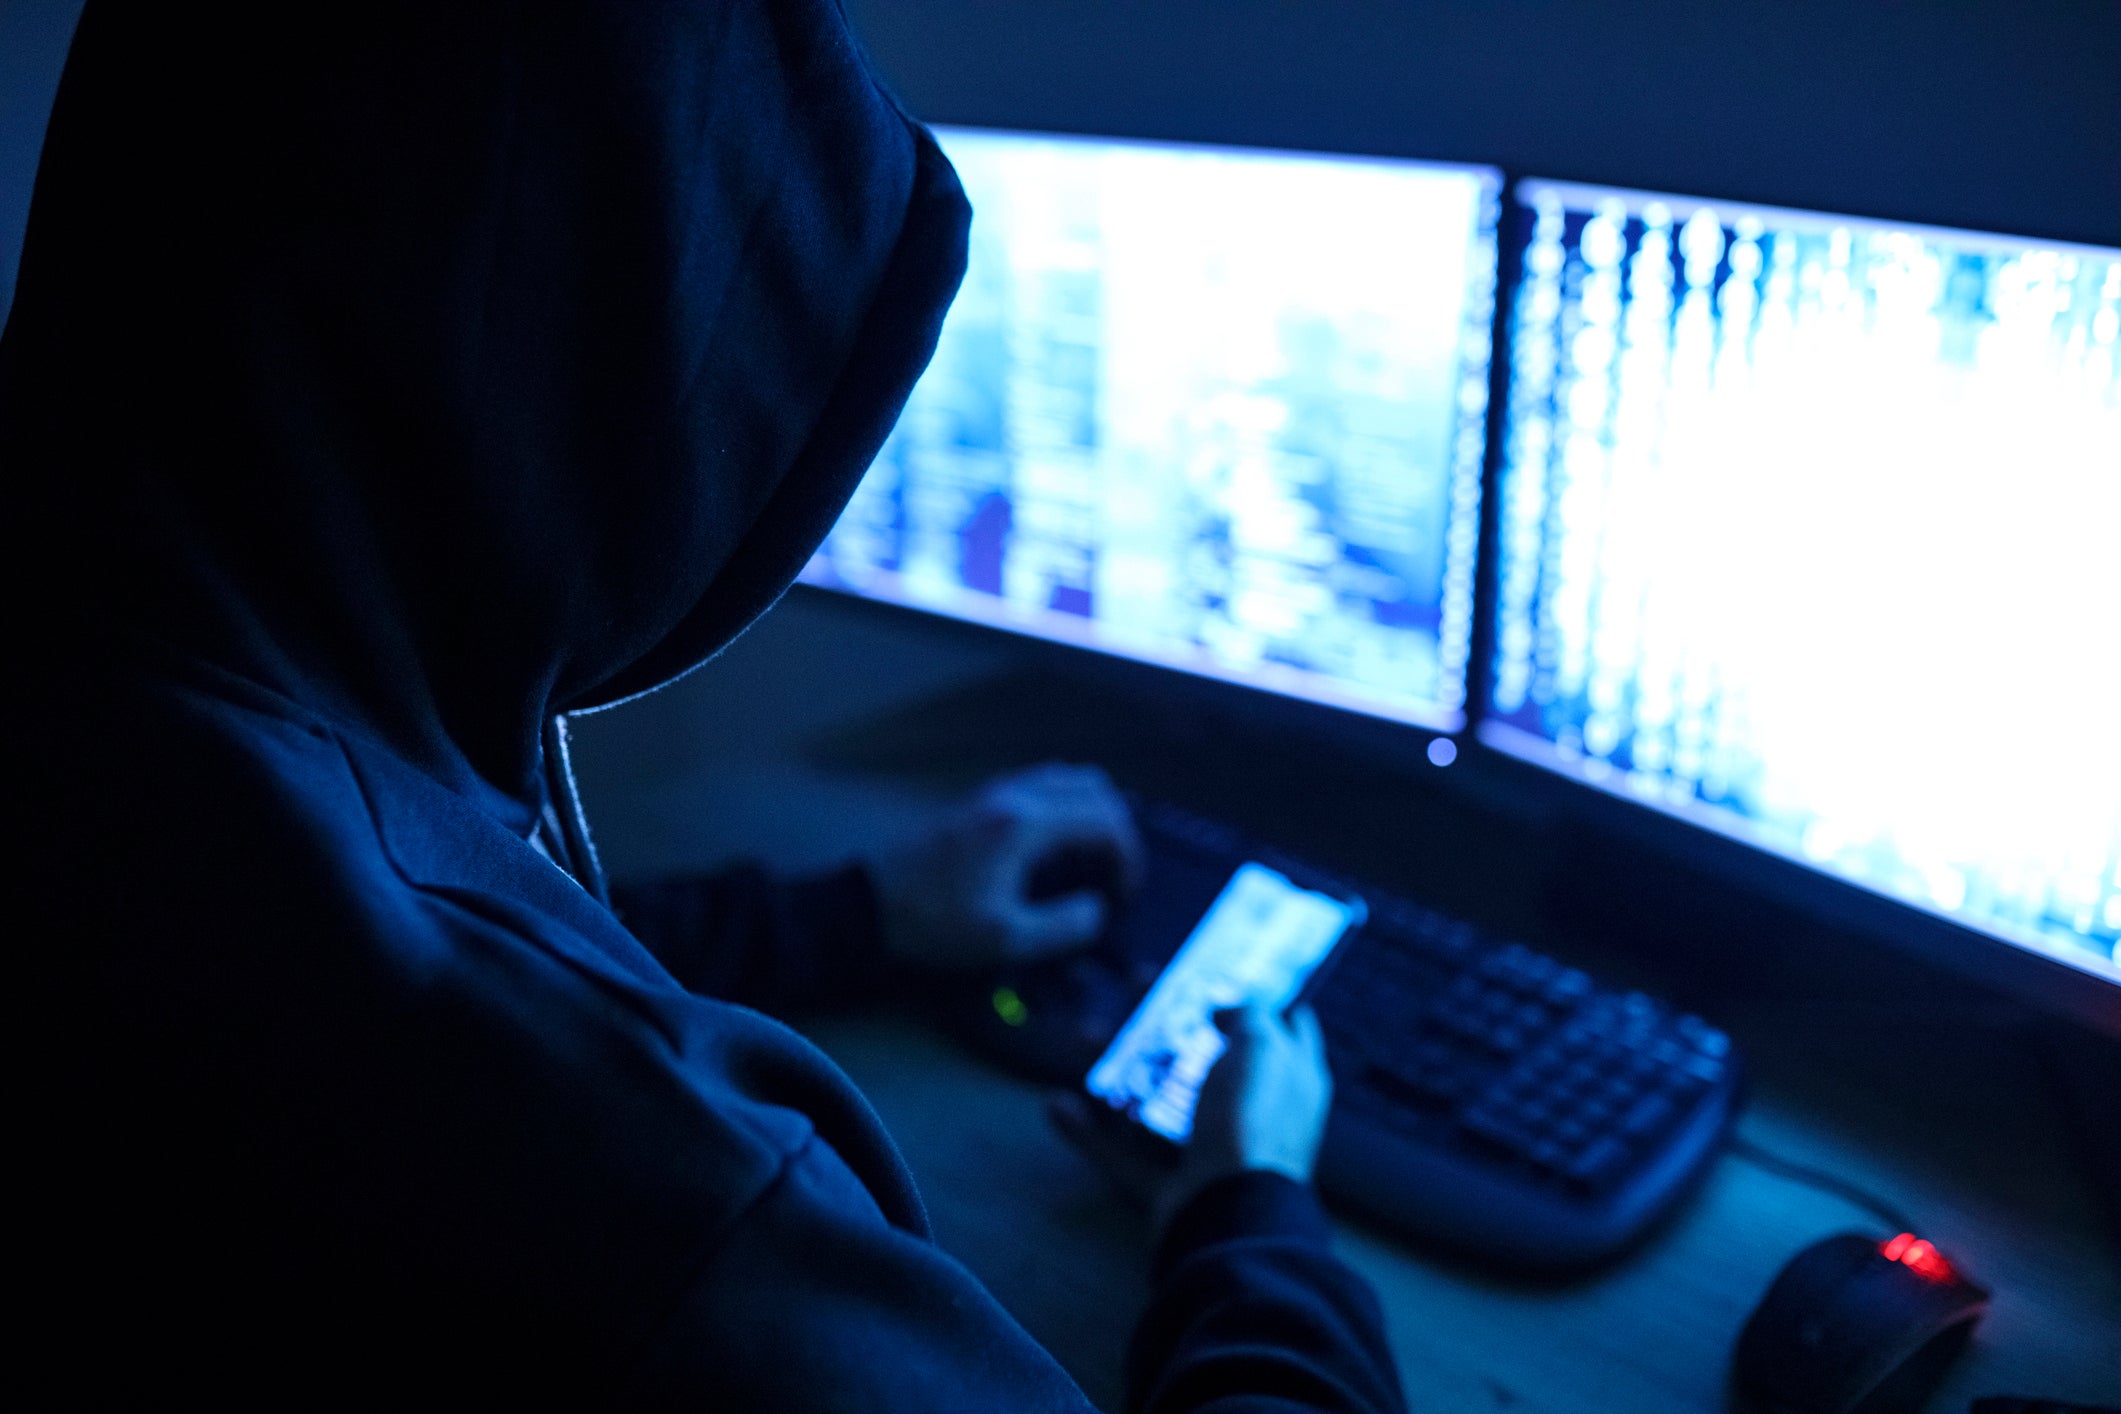 A hacker looks at a computer screen